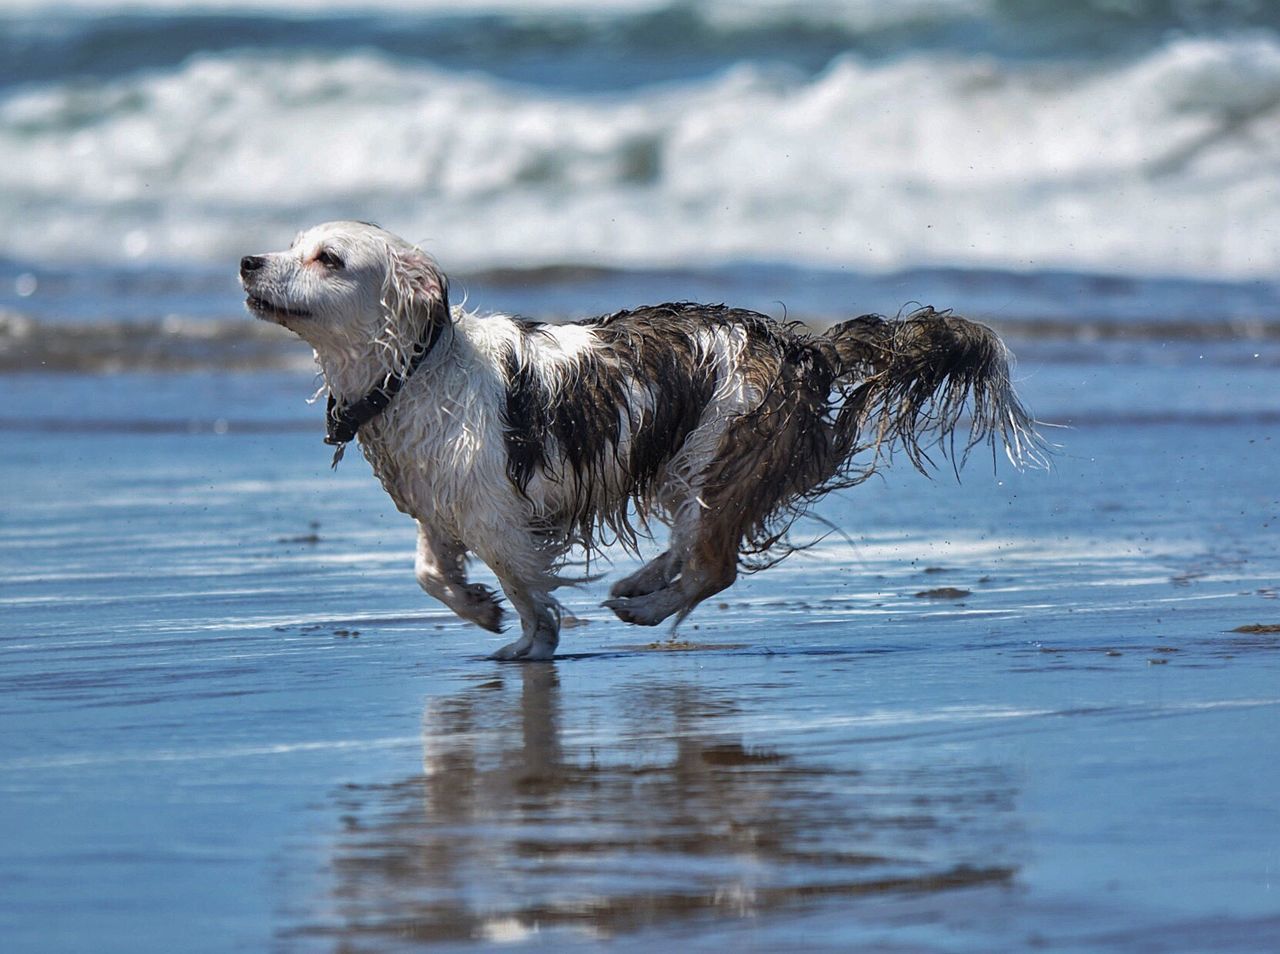 DOG RUNNING ON WET SHORE AT BEACH